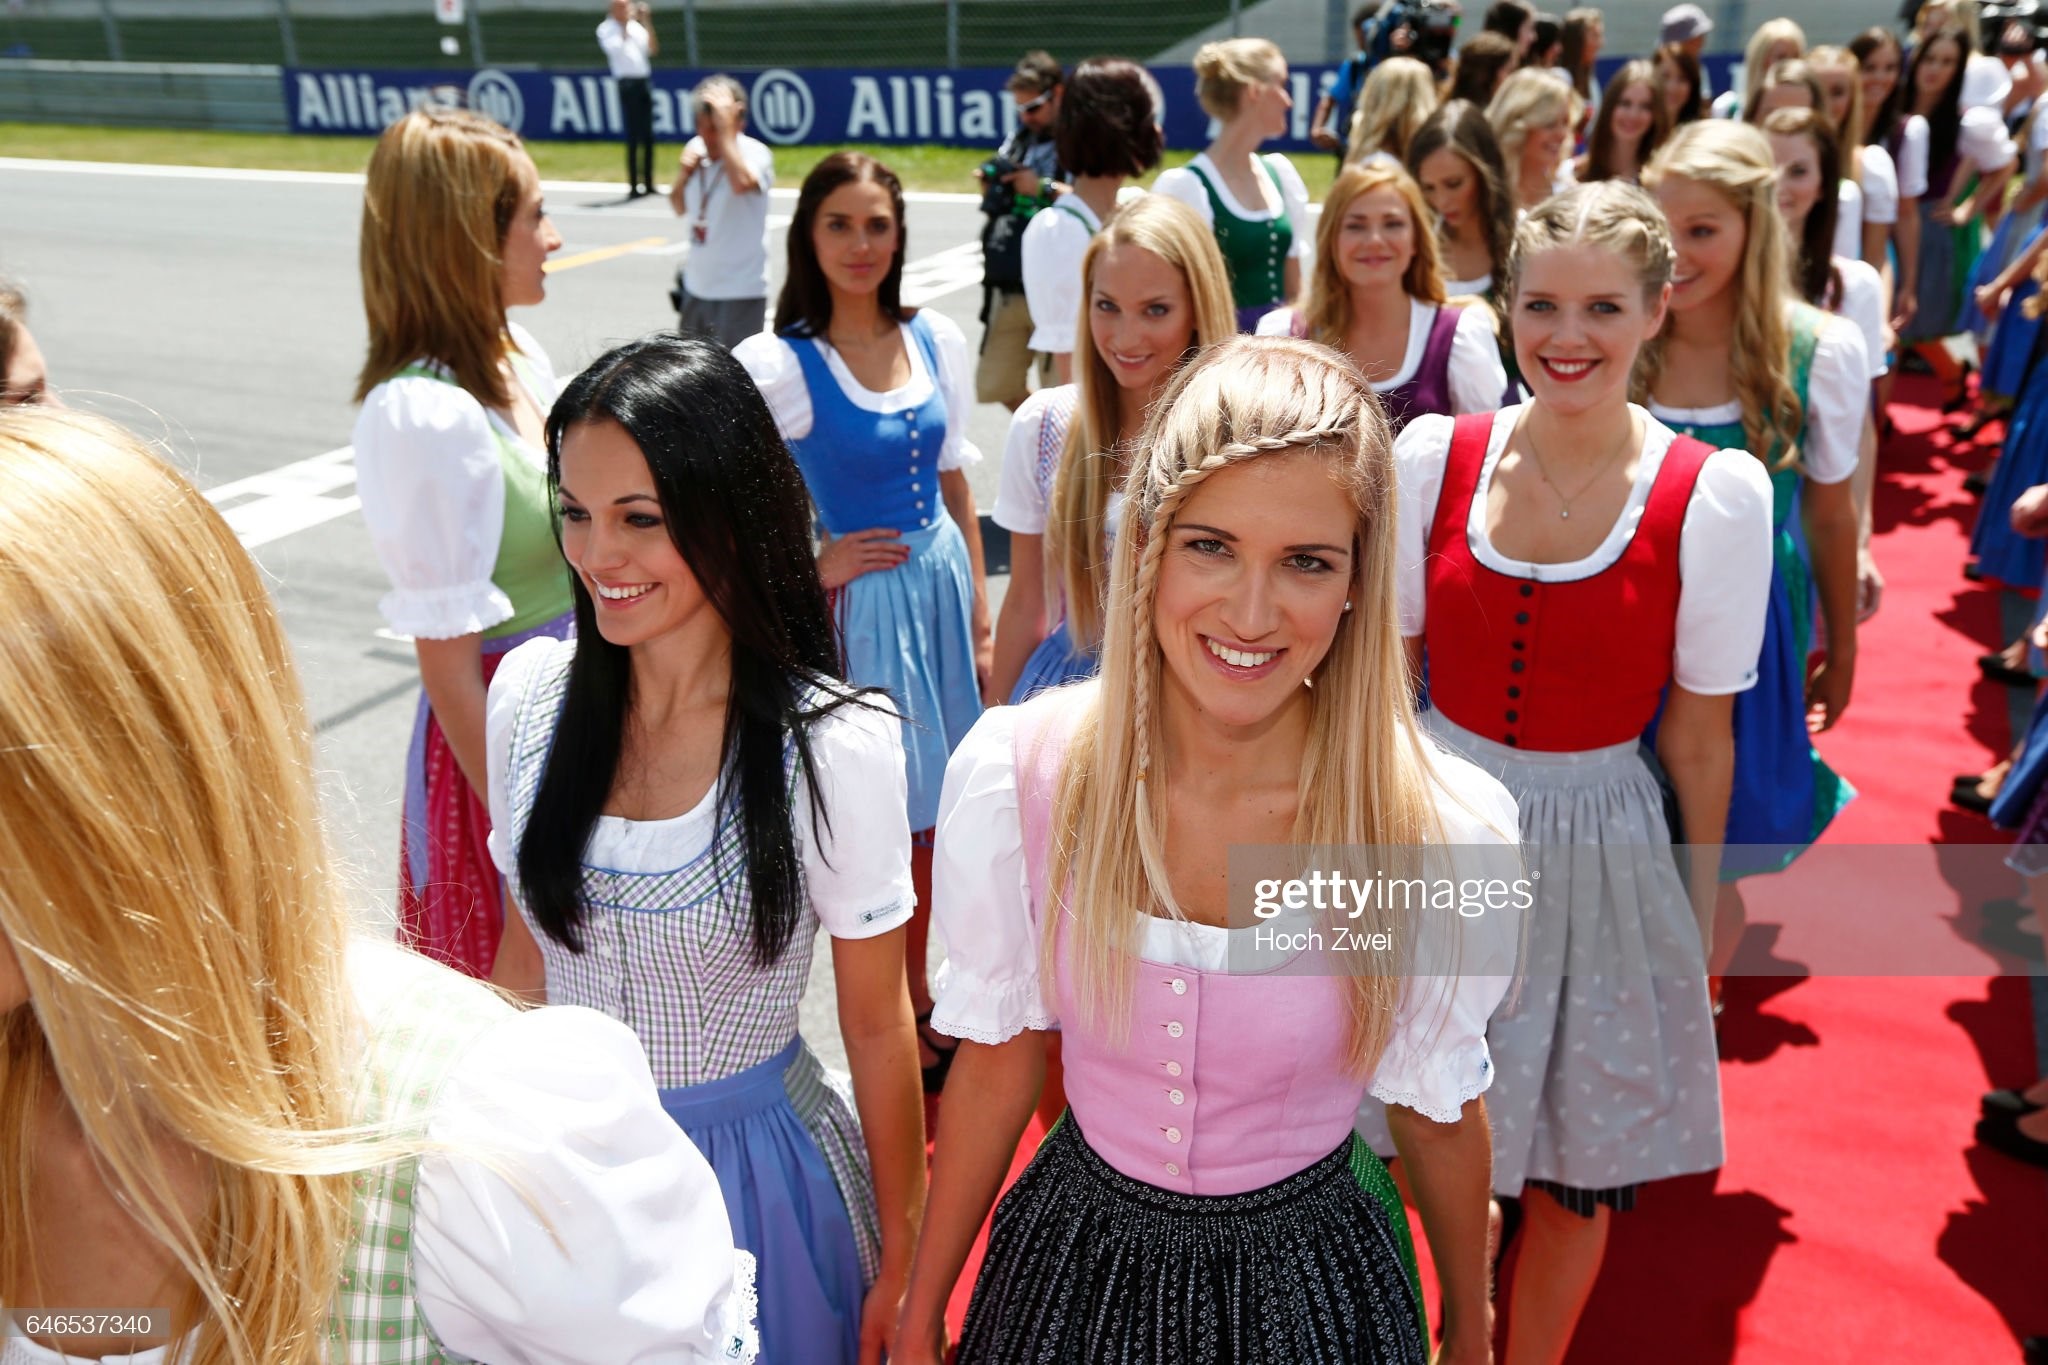 Formula One World Championship, Grand Prix of Austria, June 22, 2014, grid girls. 